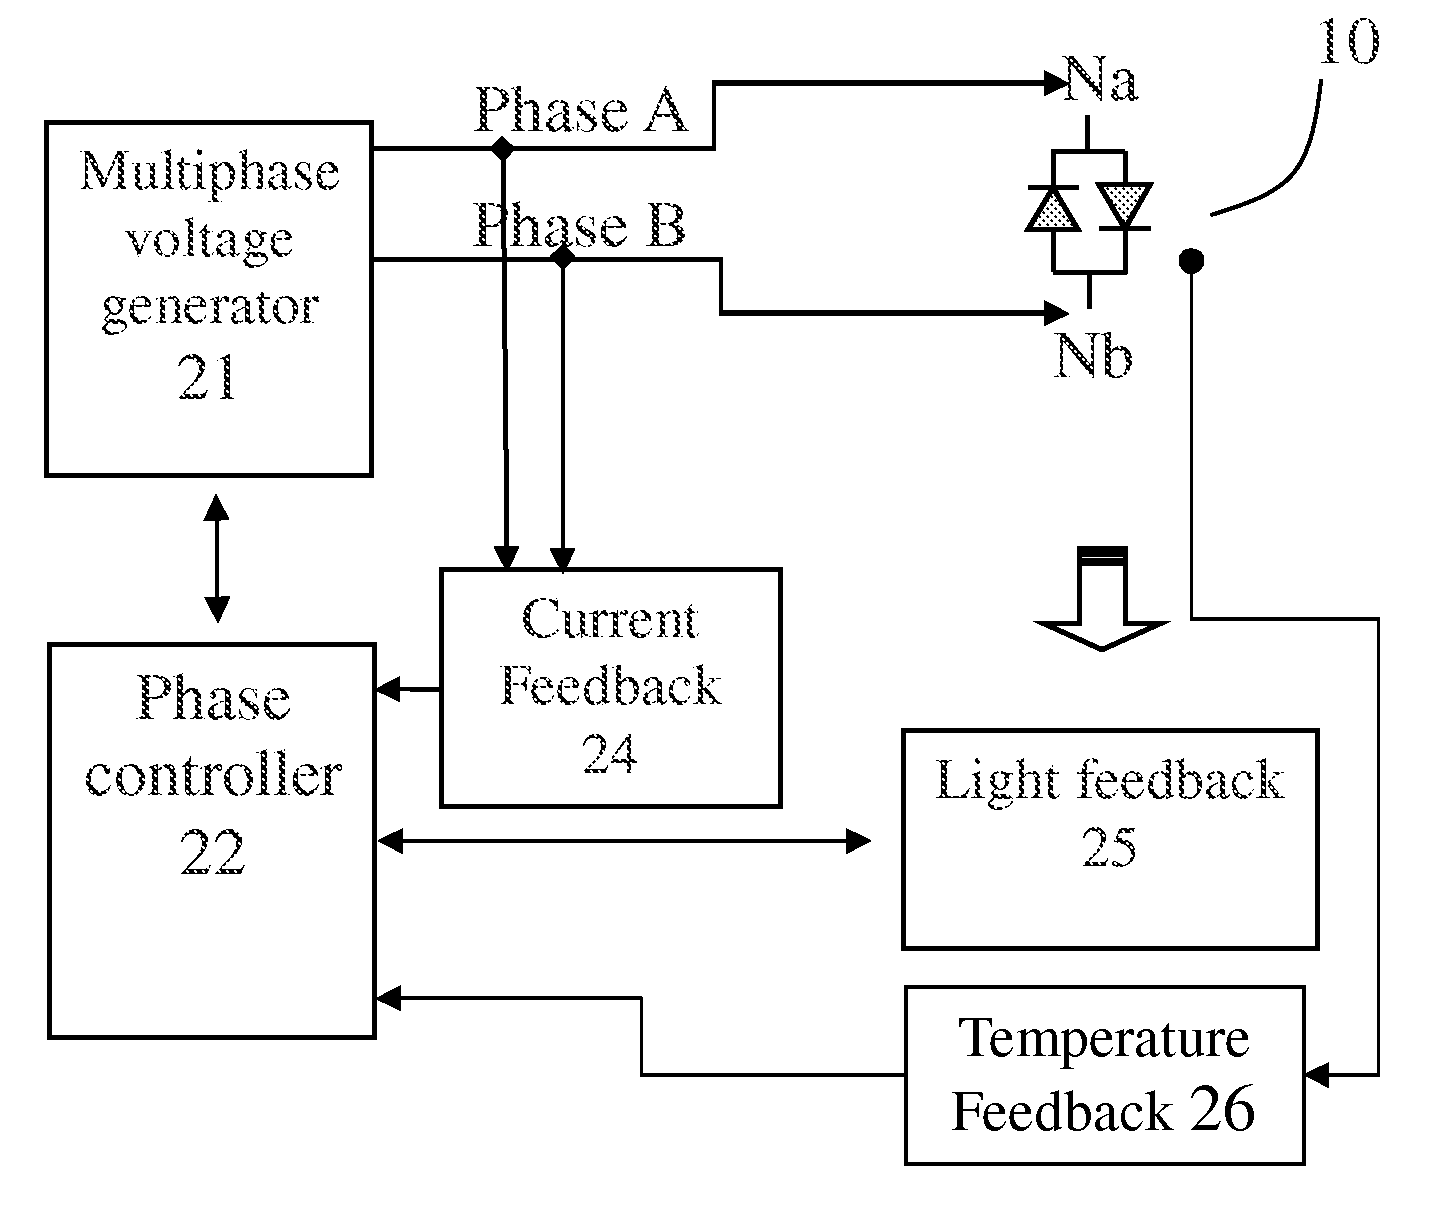 Multiphase voltage sources driven AC—LED